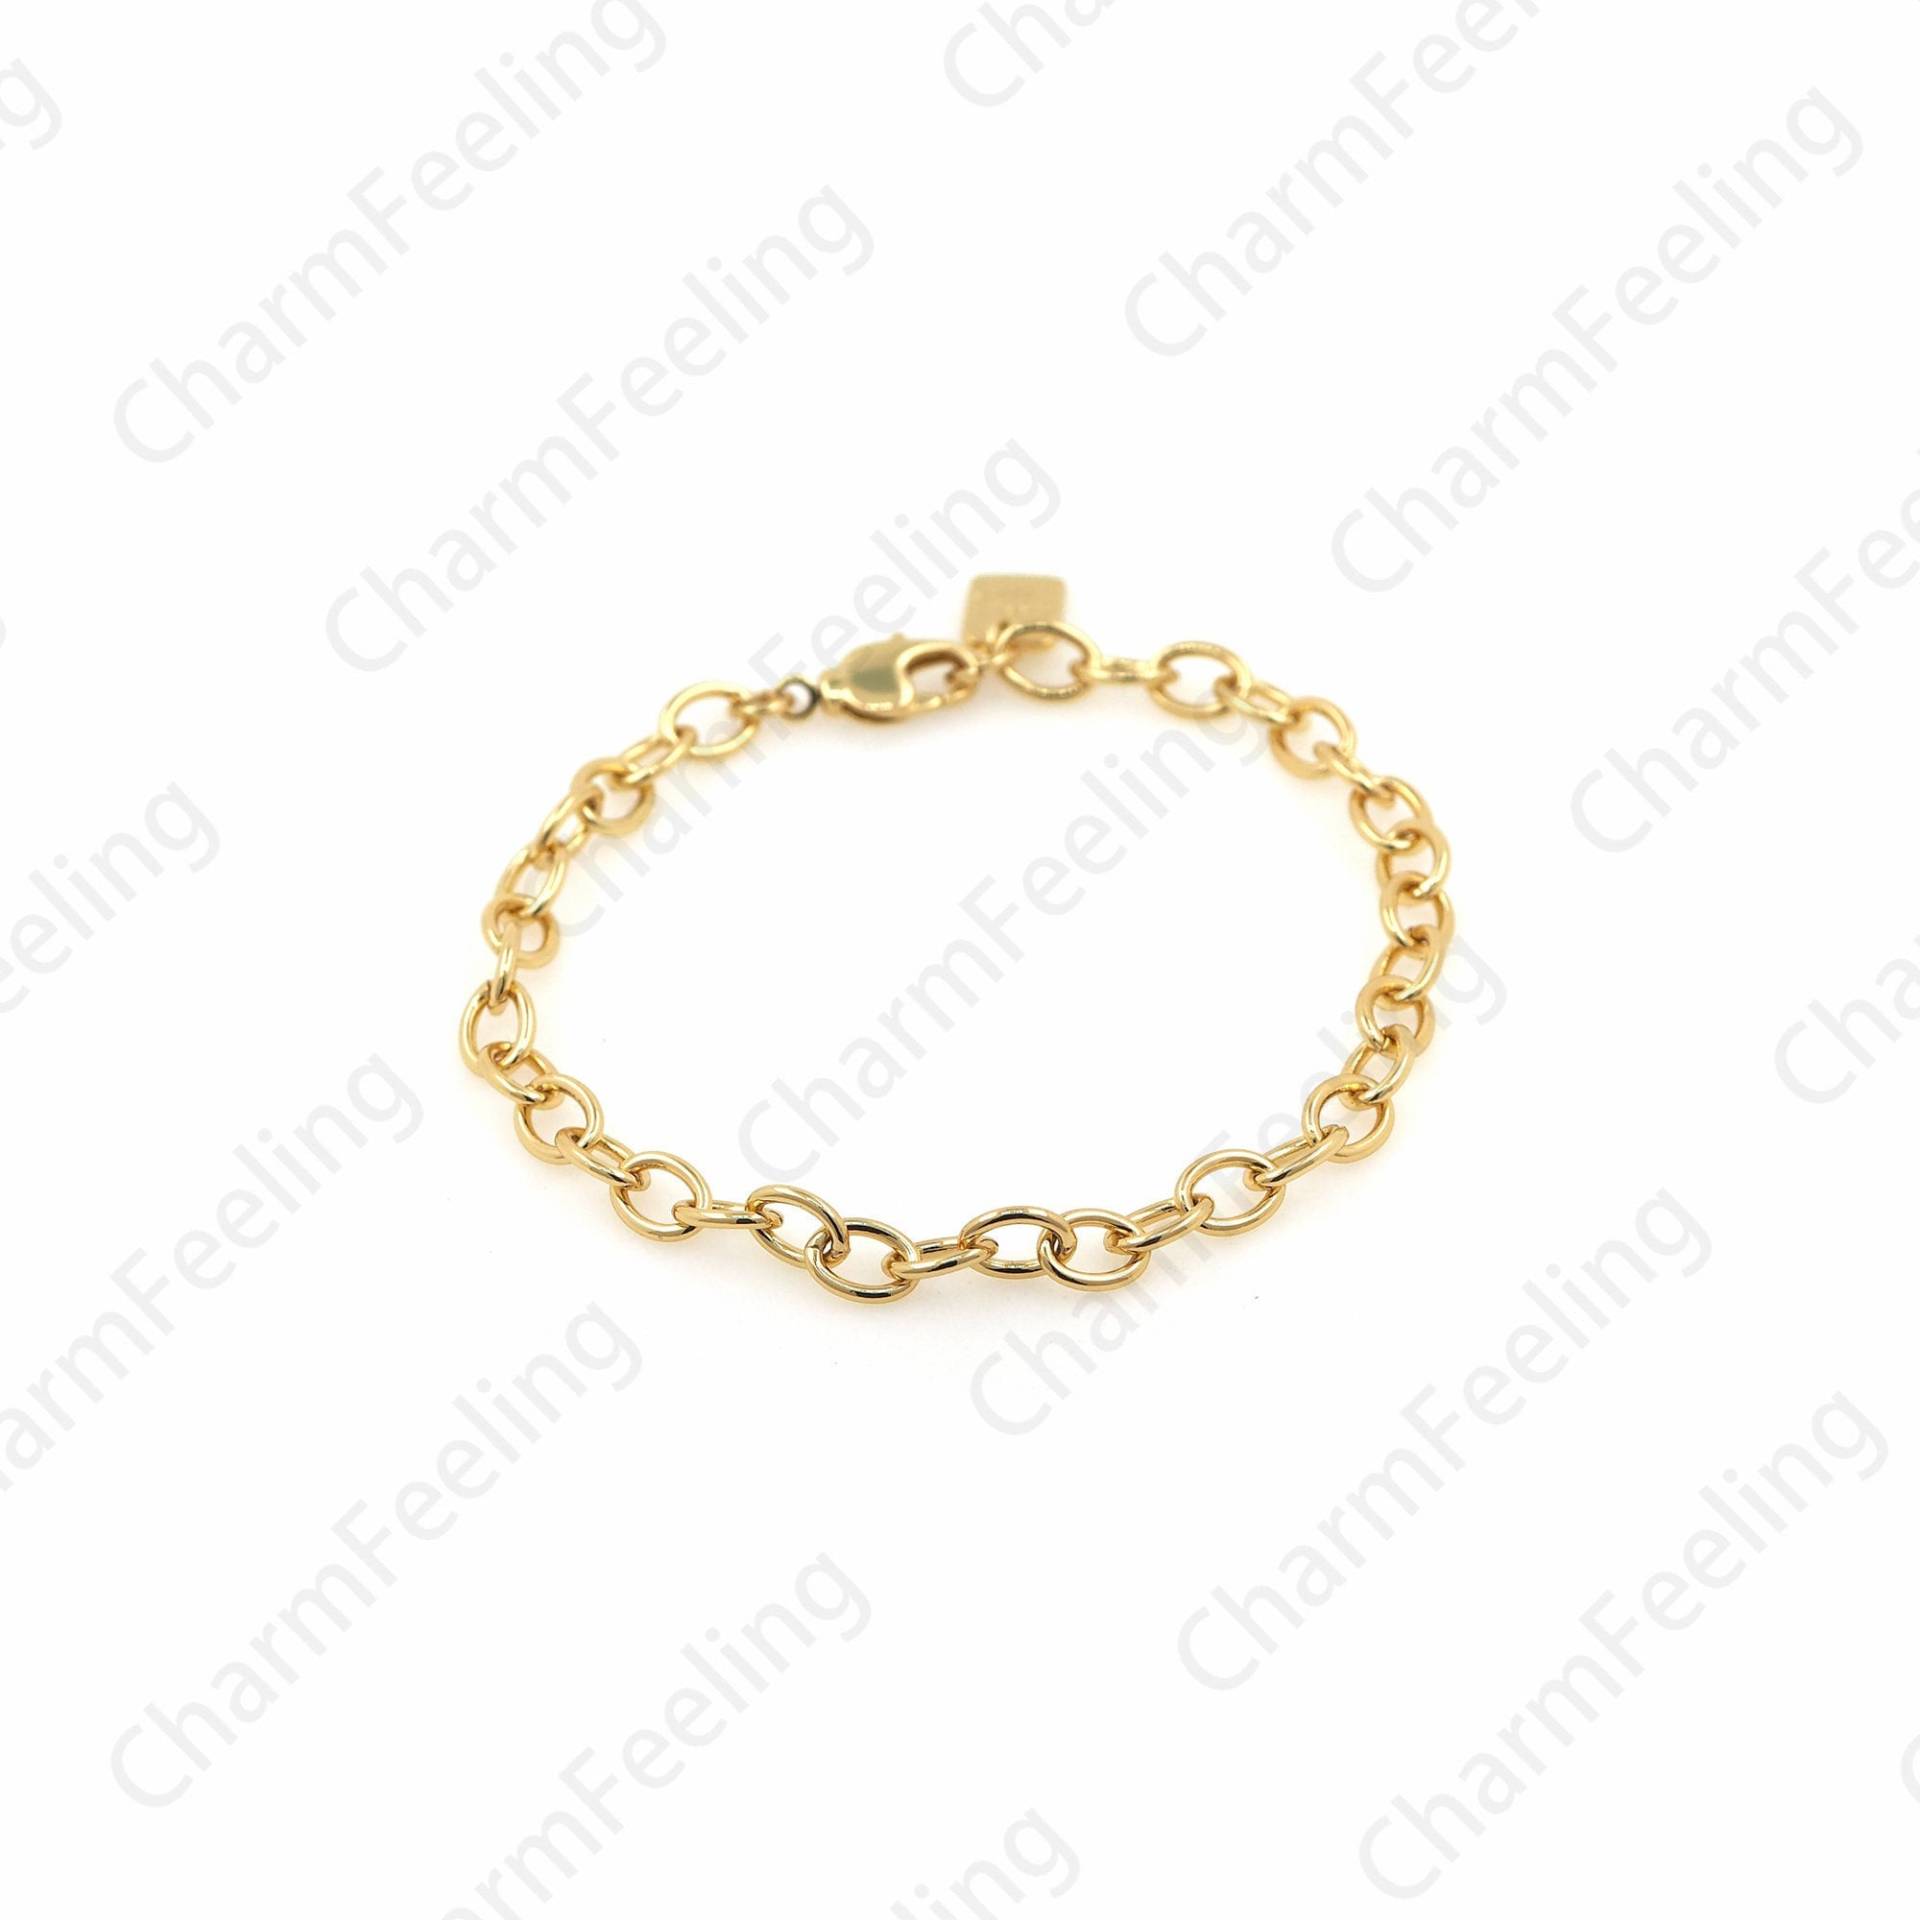 18K Gold Filled O-Förmiges Pin-Armband Herrenarmband Einfaches Armband Kettenarmband Für Verliebte 17cm von CharmFeeling